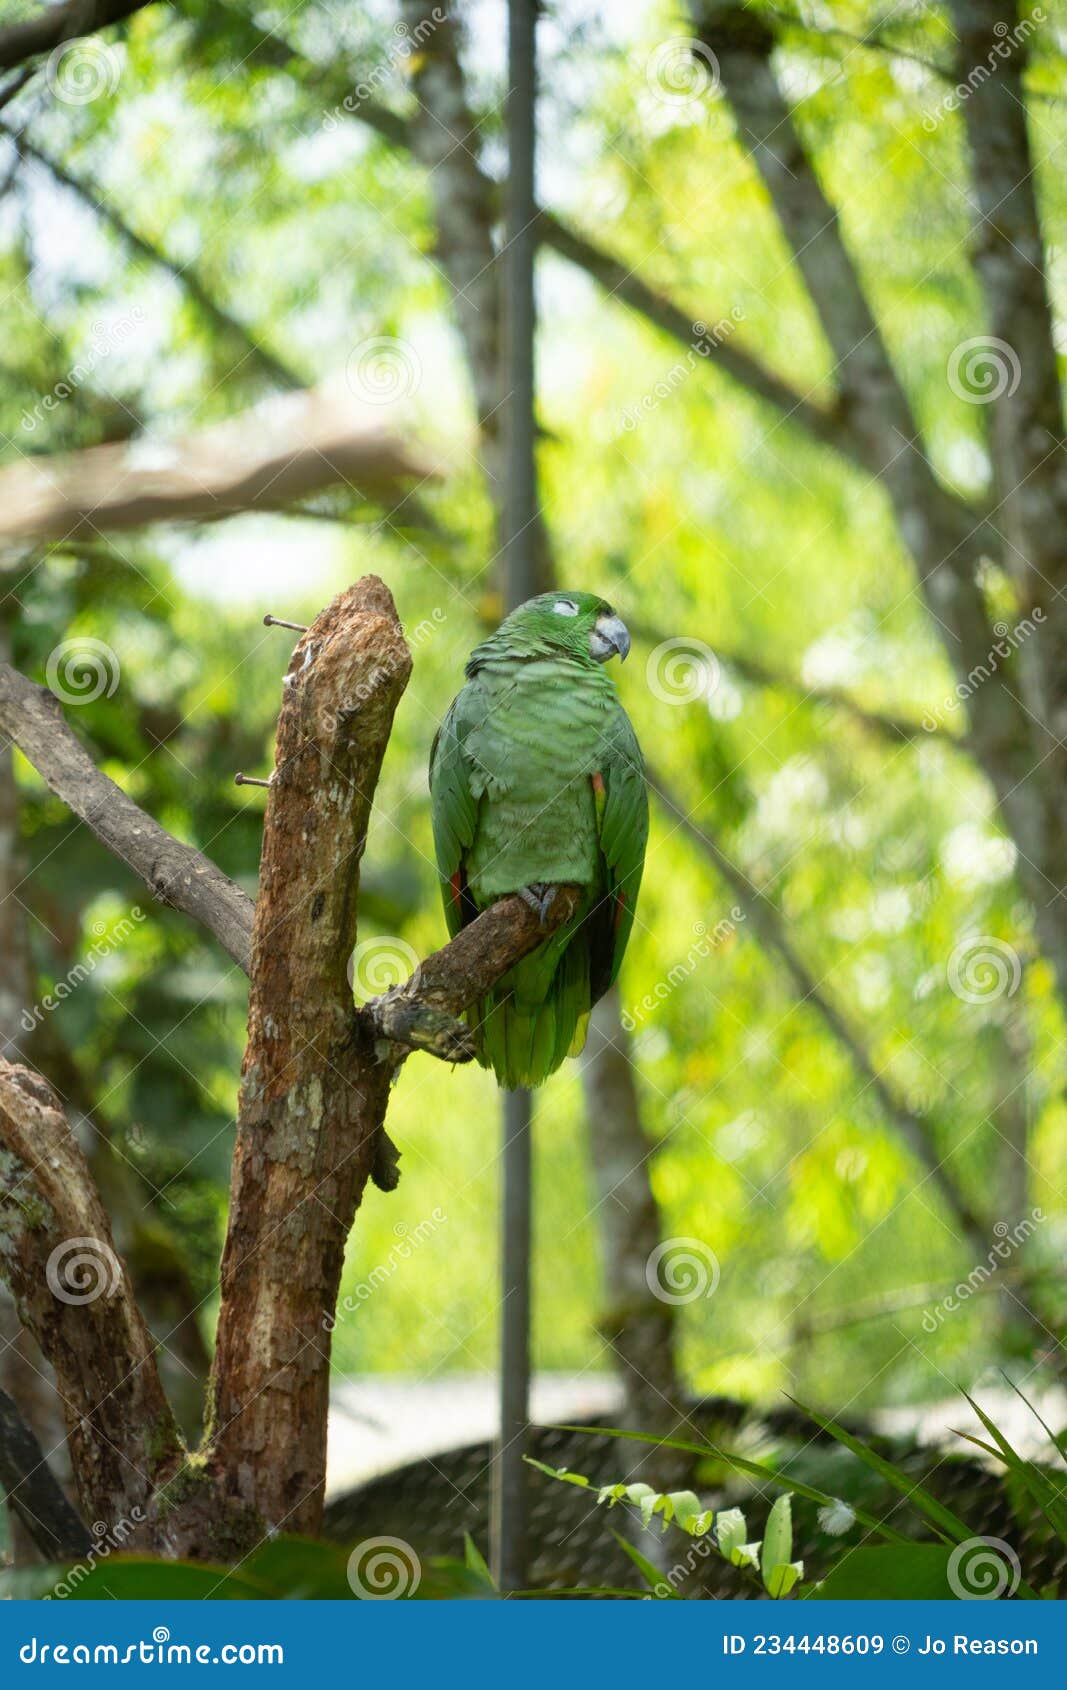 yellow crowned parrot, amazon region ecuador